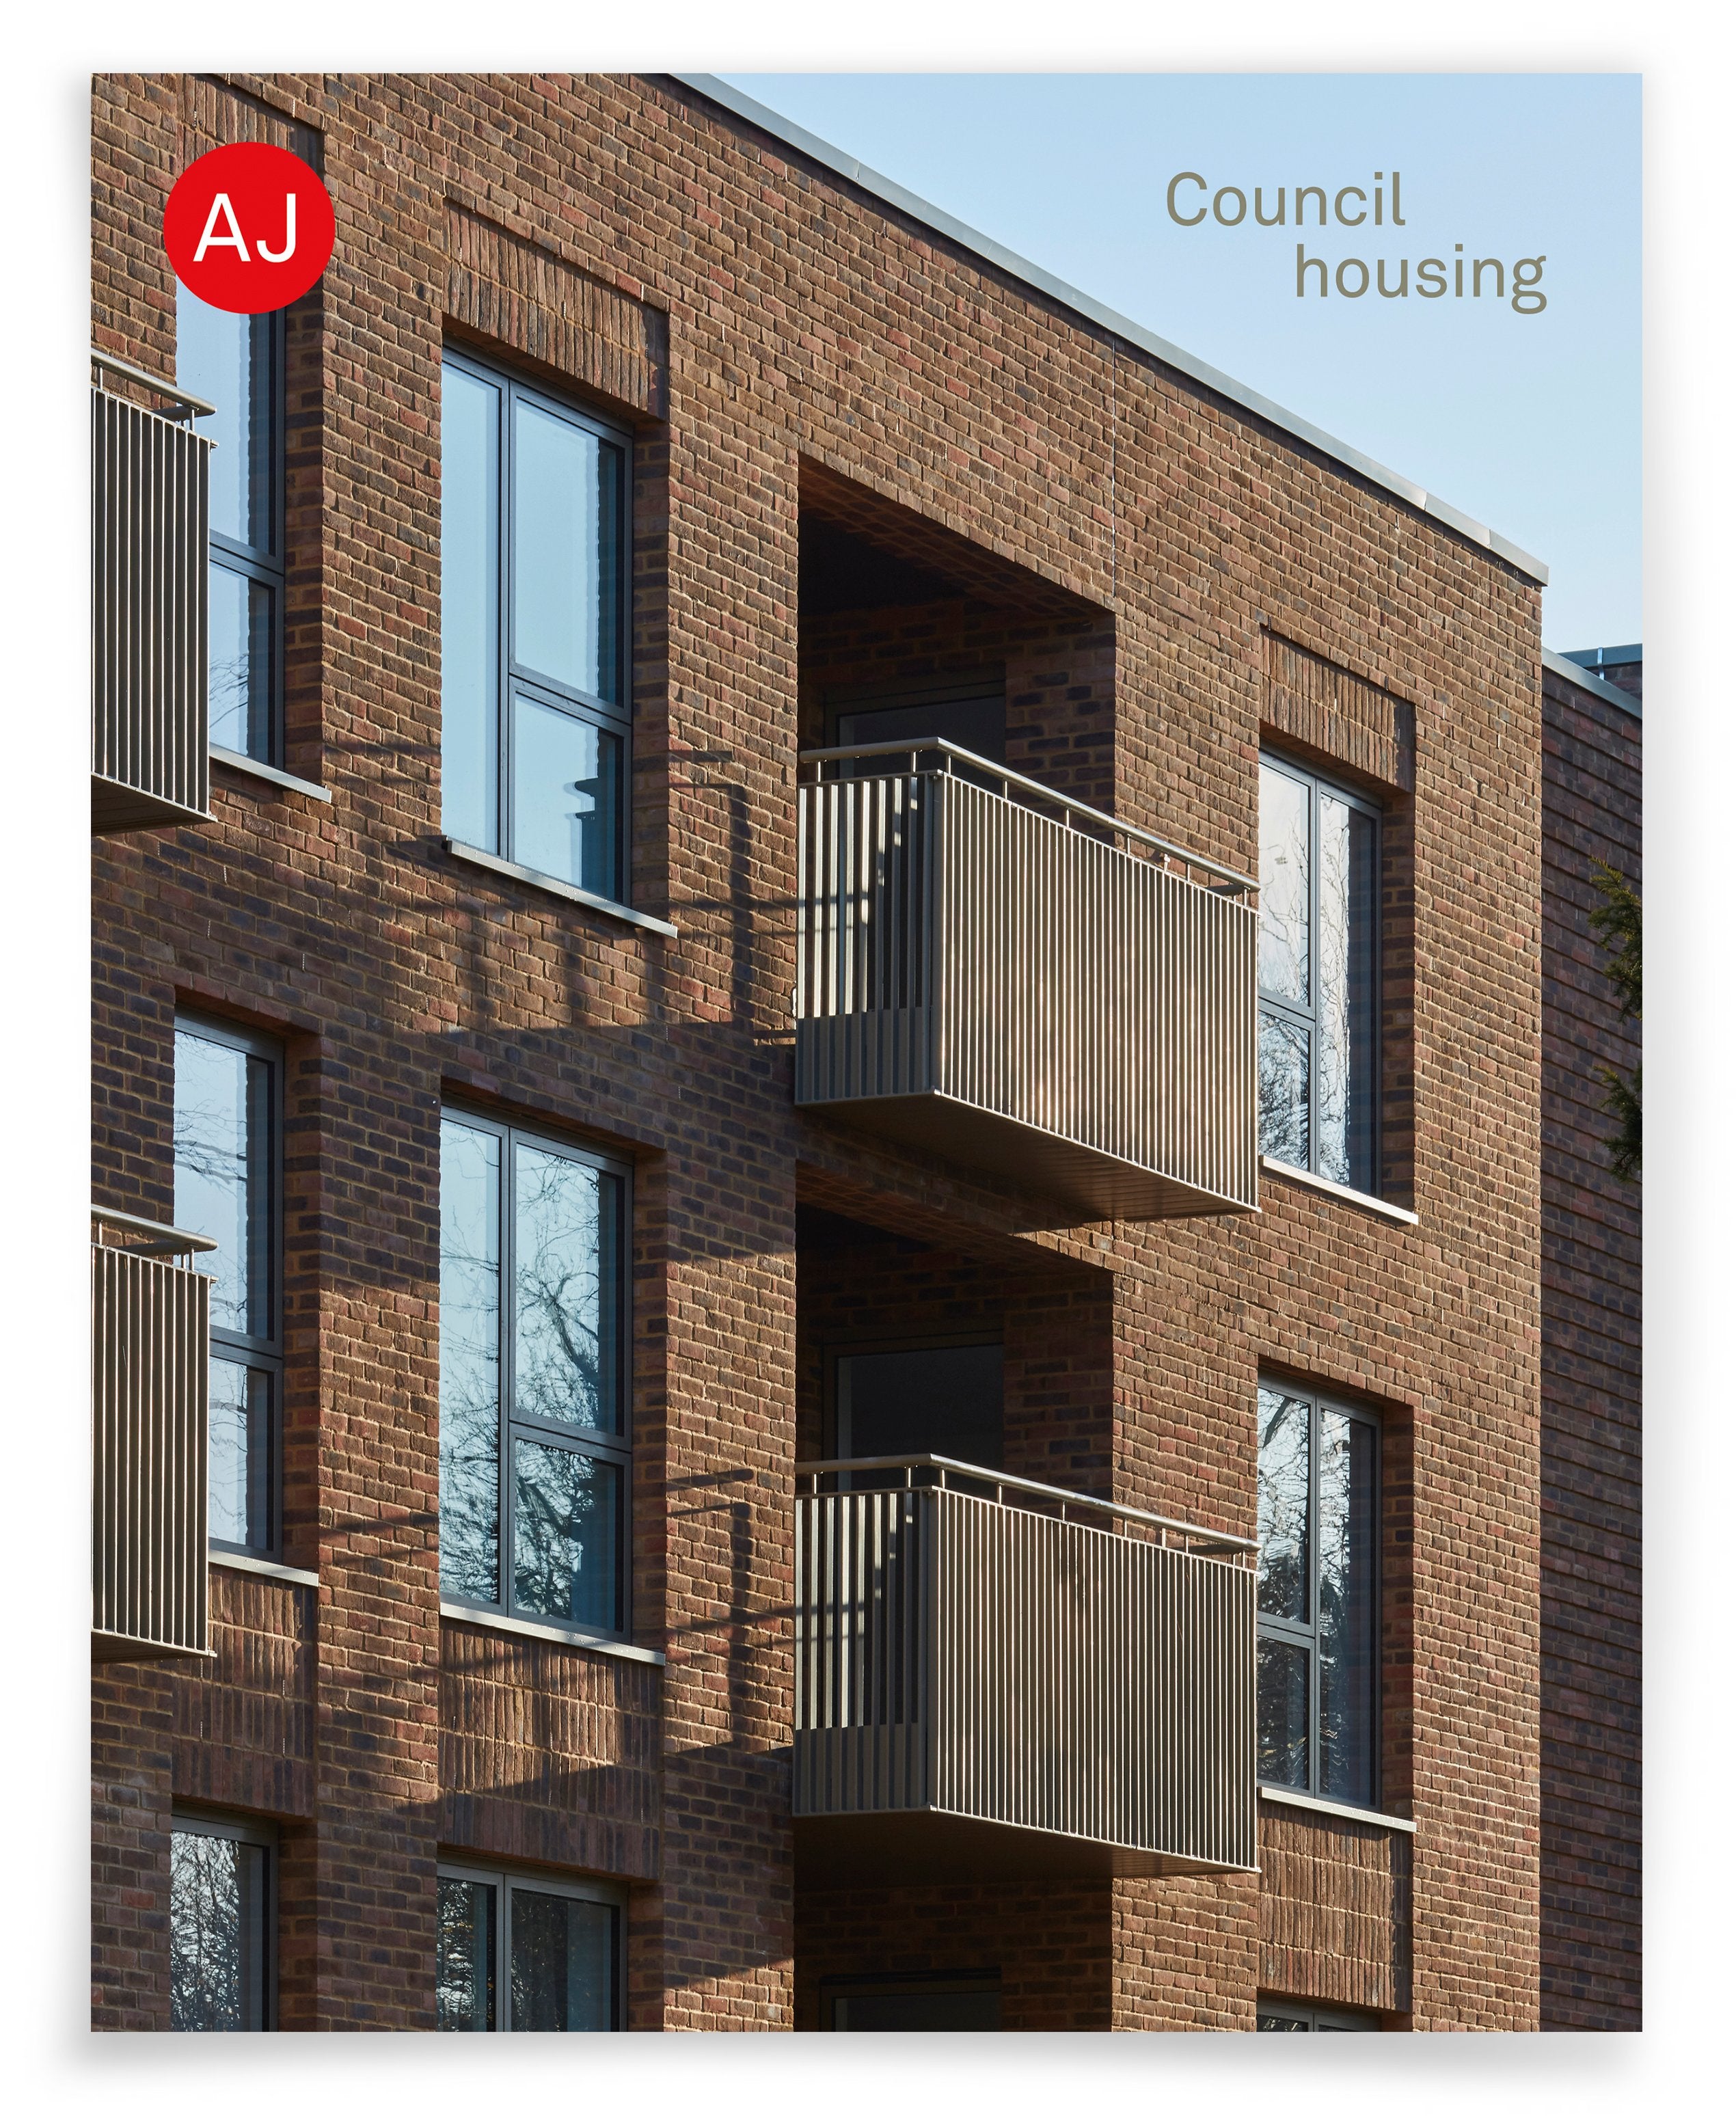 AJ 12.03.20: Council housing